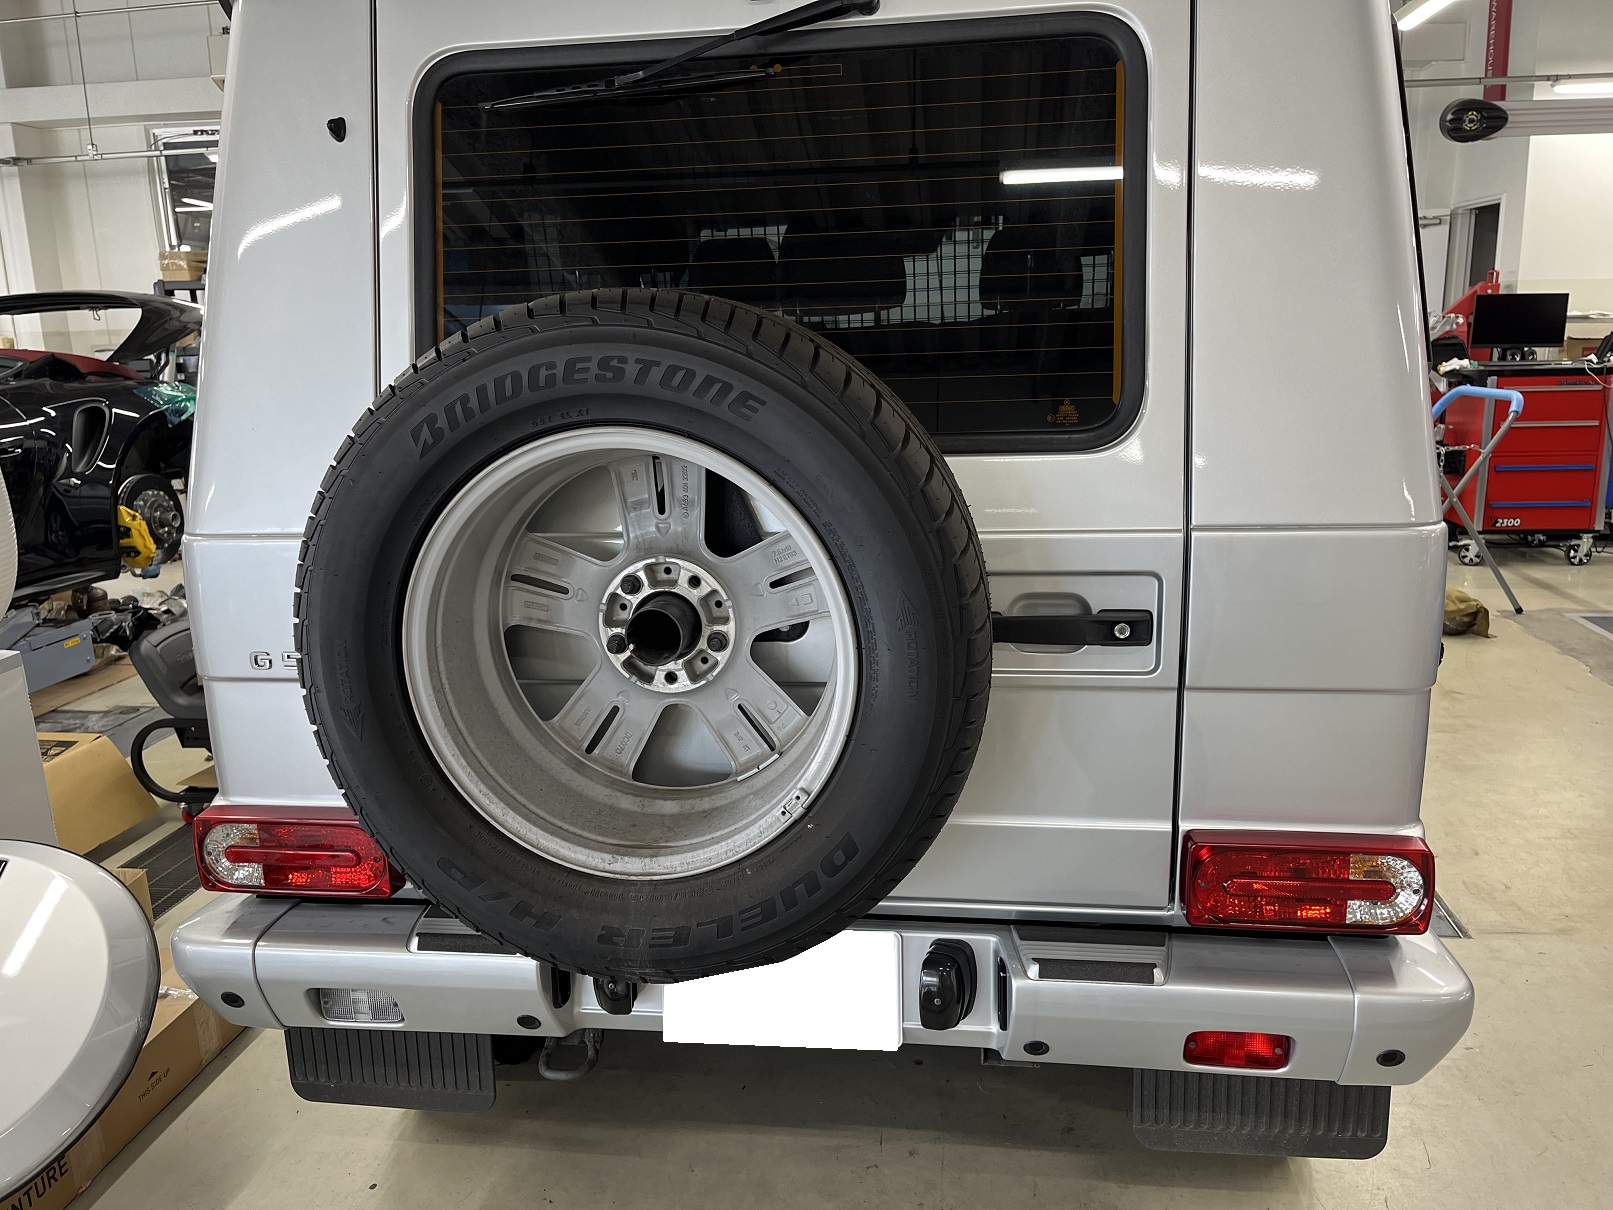 W463　ｹﾞﾚﾝﾃﾞ FRONTRUNNER　ﾙｰﾌﾗｯｸ　CURT　ﾋｯﾁﾒﾝﾊﾞｰ　背面タイヤレス　セルモーター修理　G550　ルーフアンテナ交換　BOND葛飾